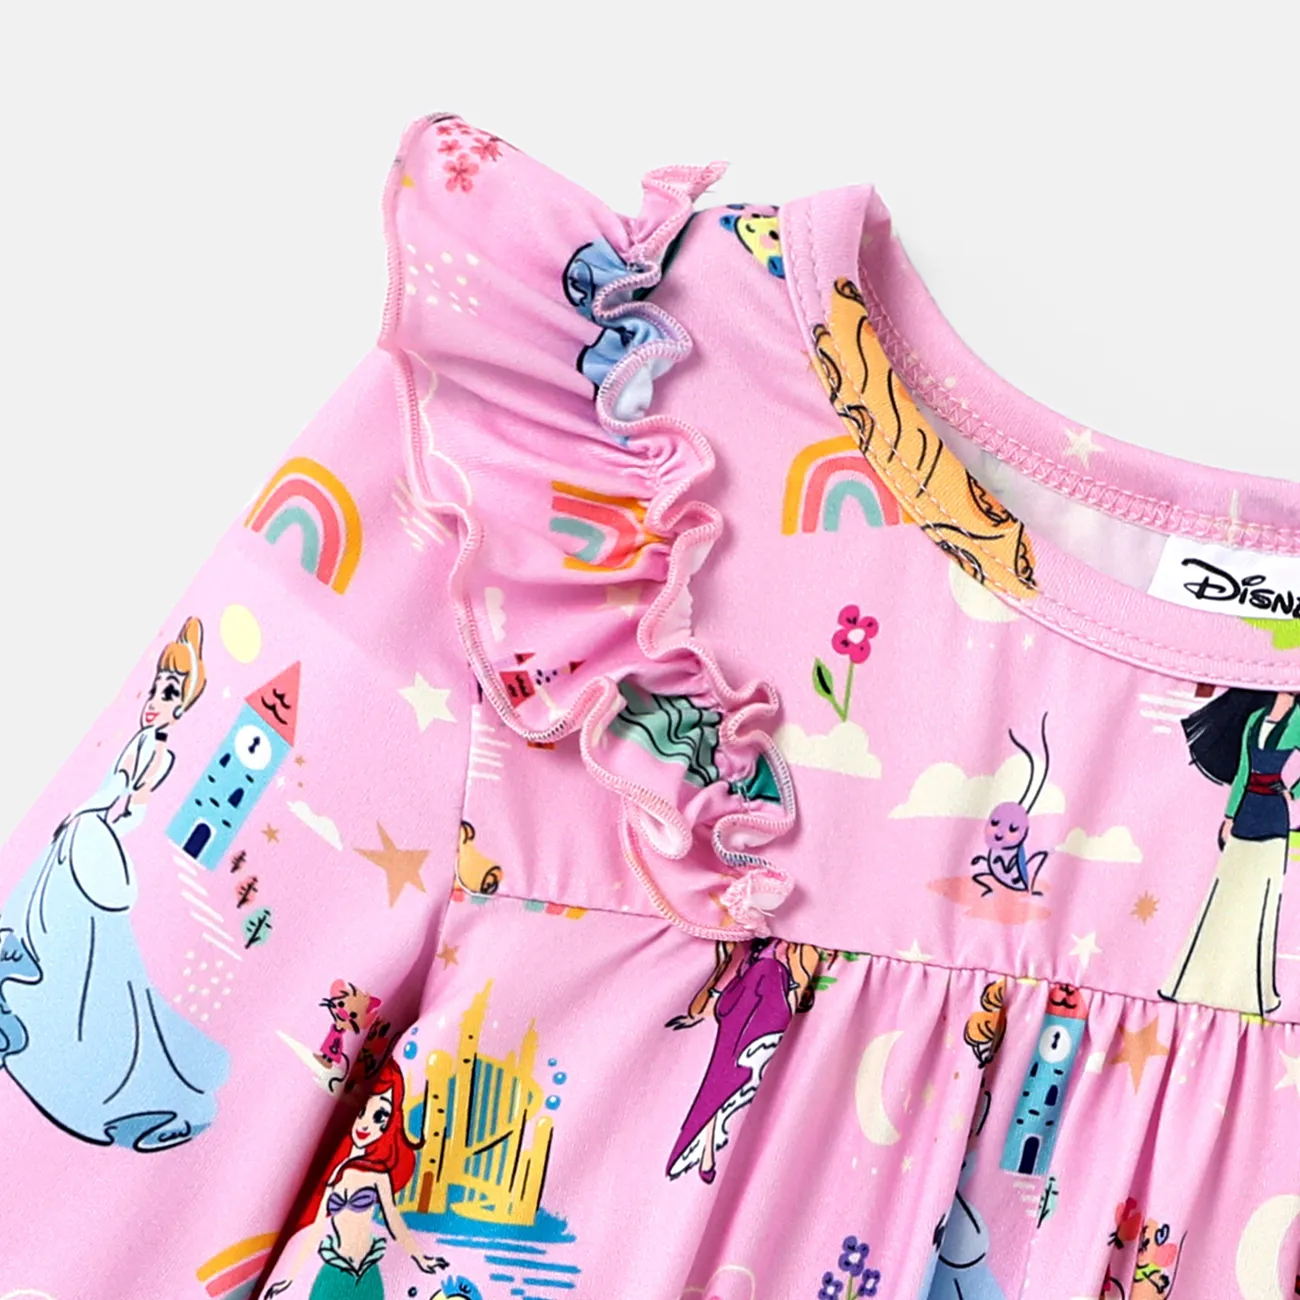 Disney Princess Toddler Girl Character Print Long-sleeve Dress  Pink big image 1